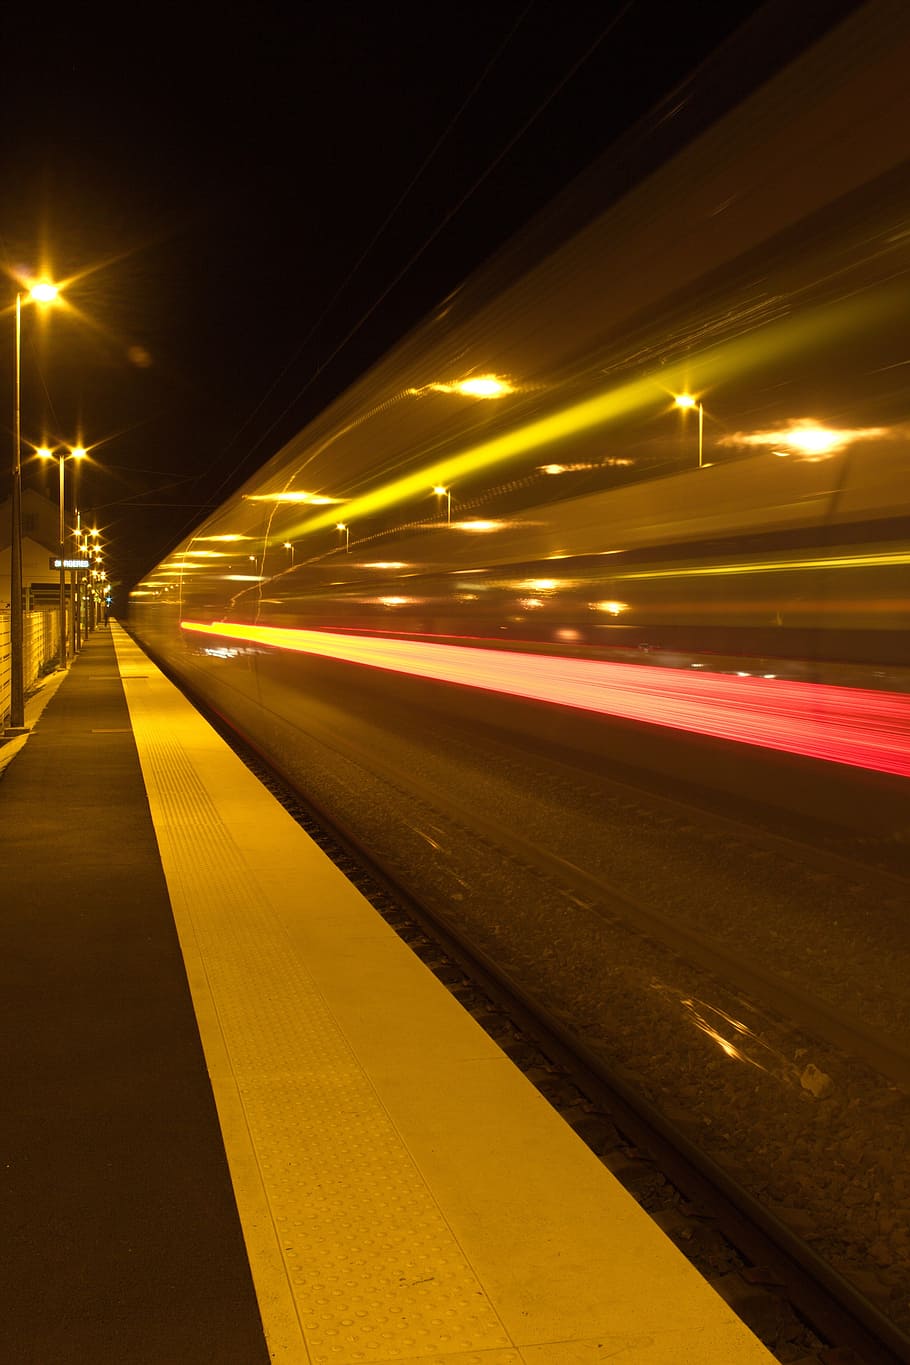 tren, ter, muelle, velocidad, estación, noche, iluminación, reflexión, transparencia, vía